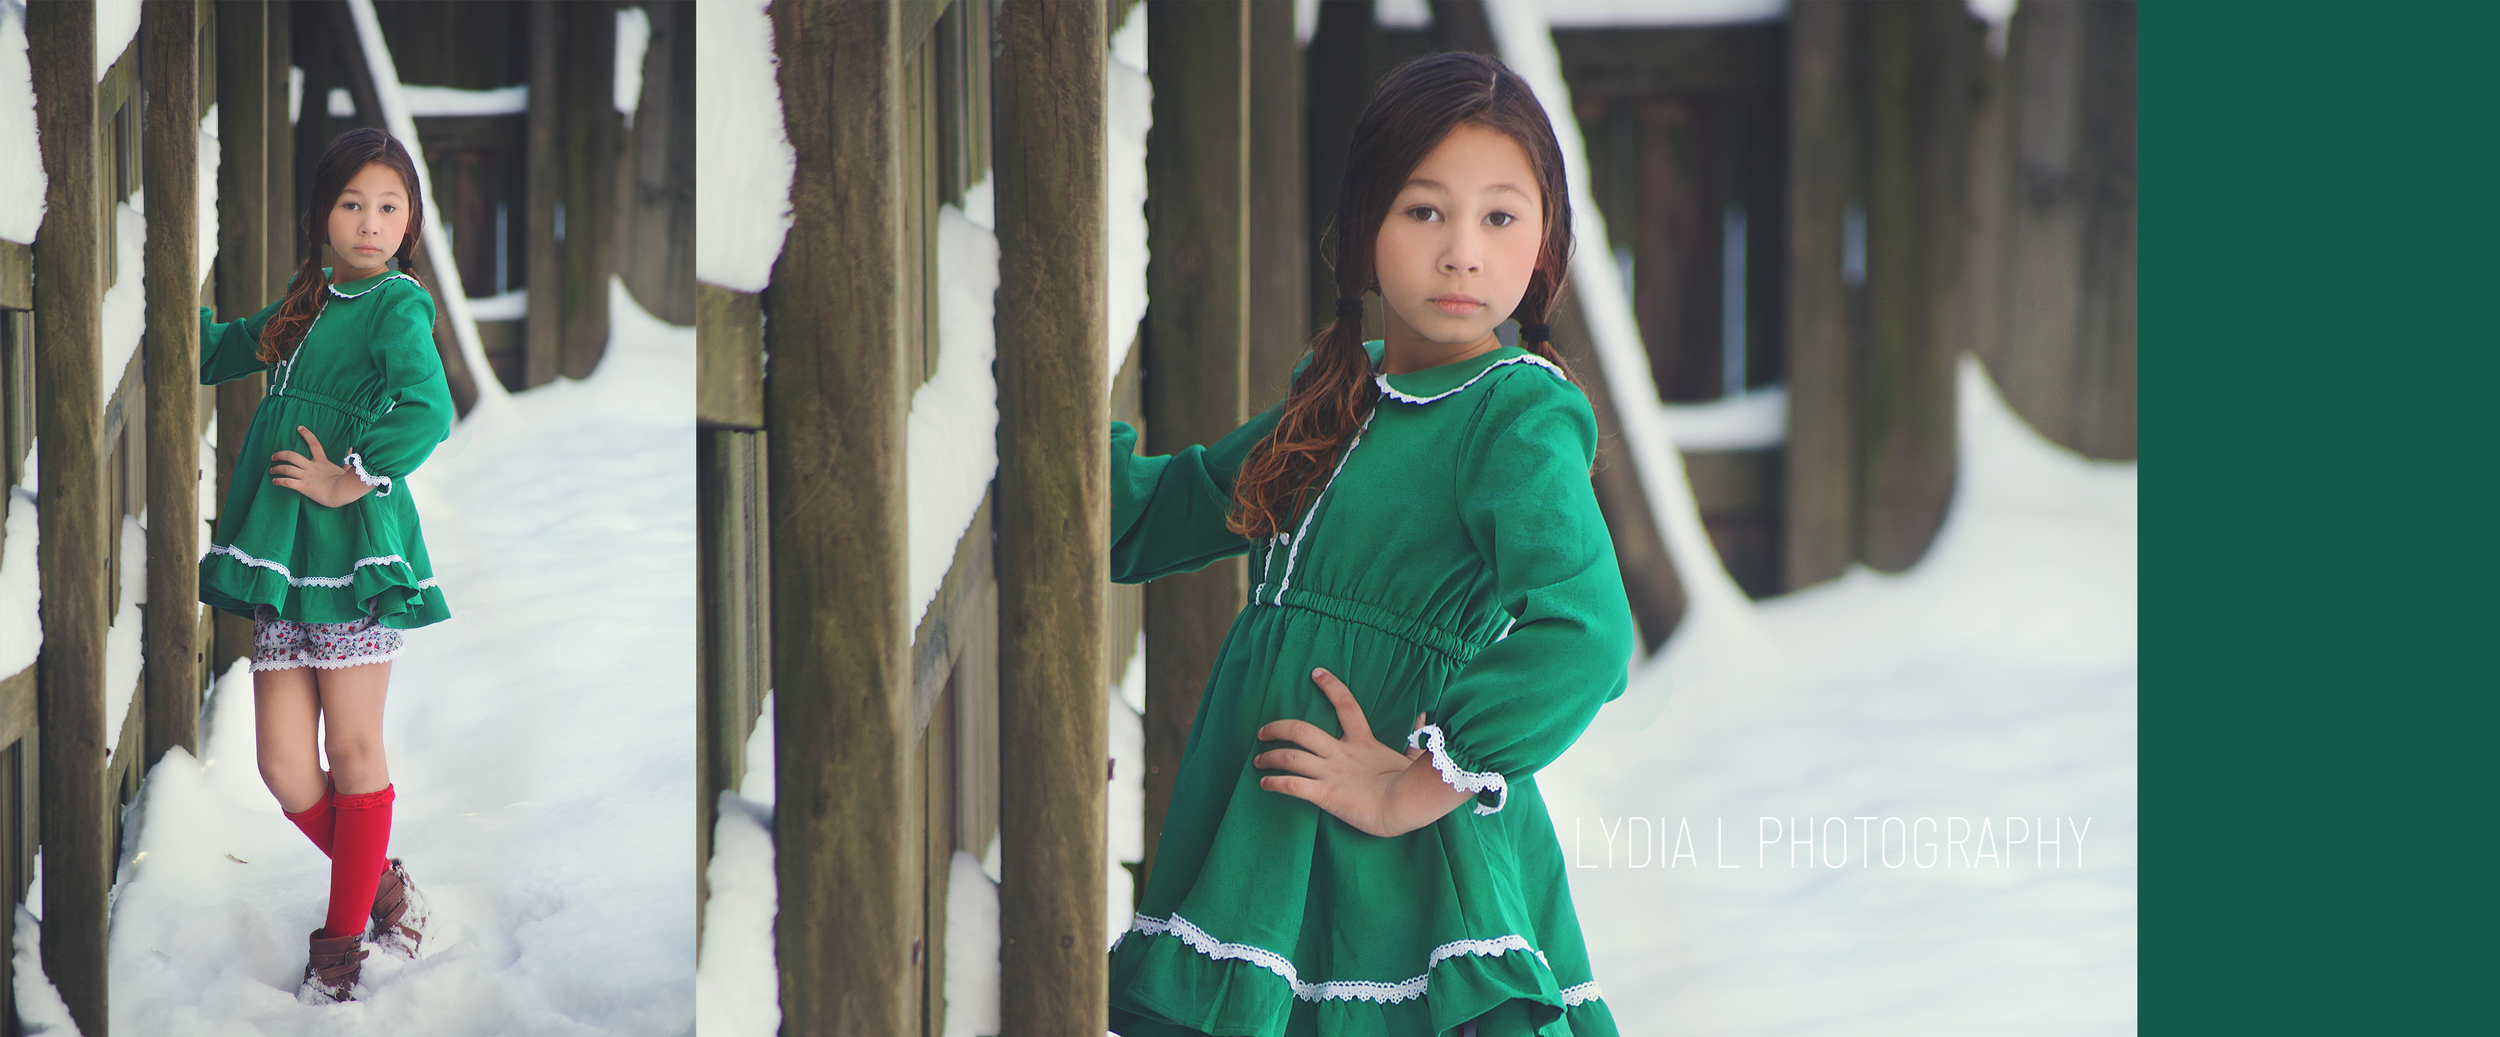 girl standing in snow, green dress, Mount Juliet Tennessee